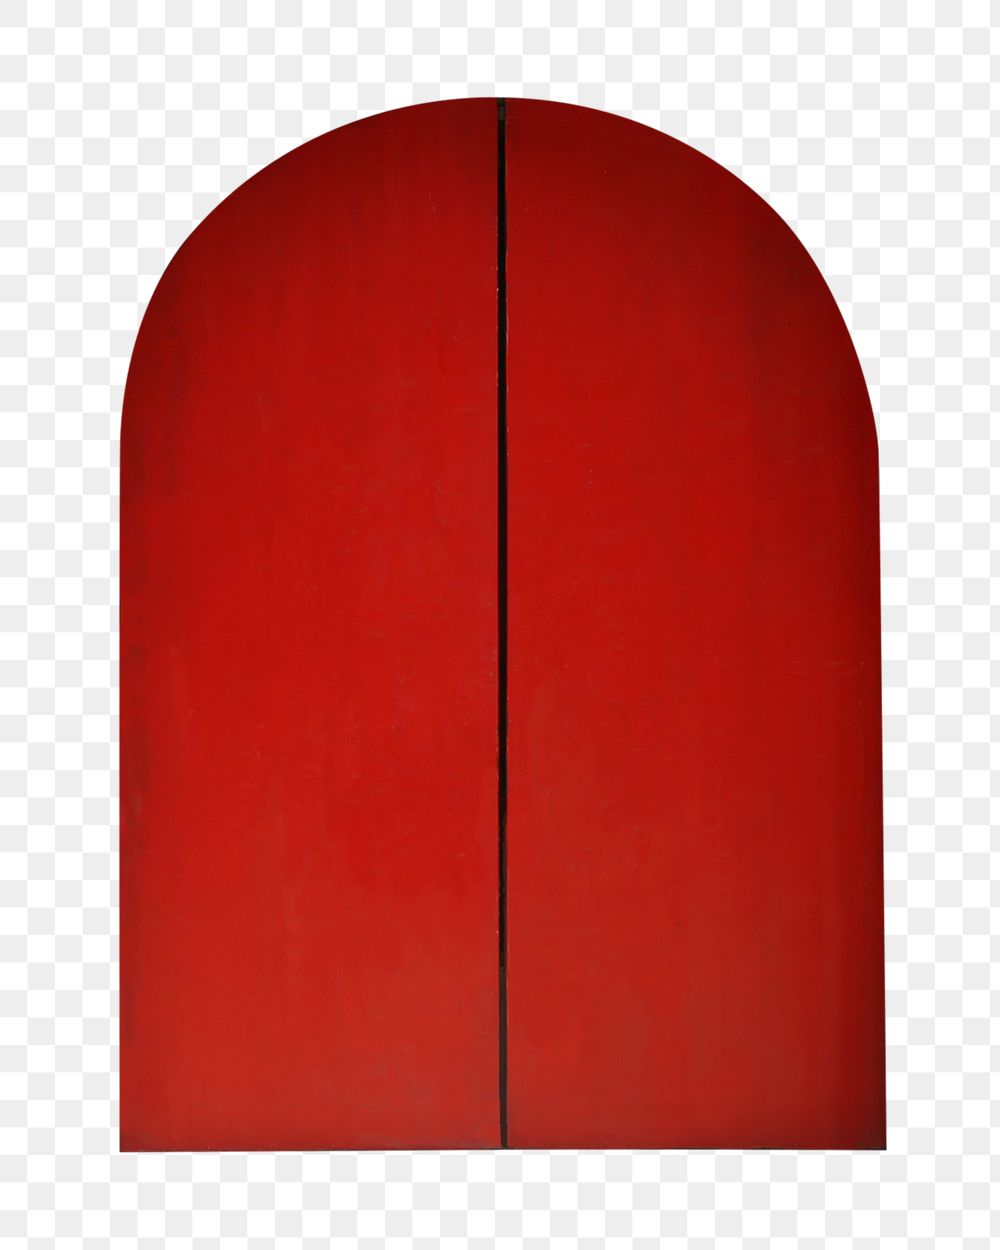 Png red wooden door sticker, transparent background